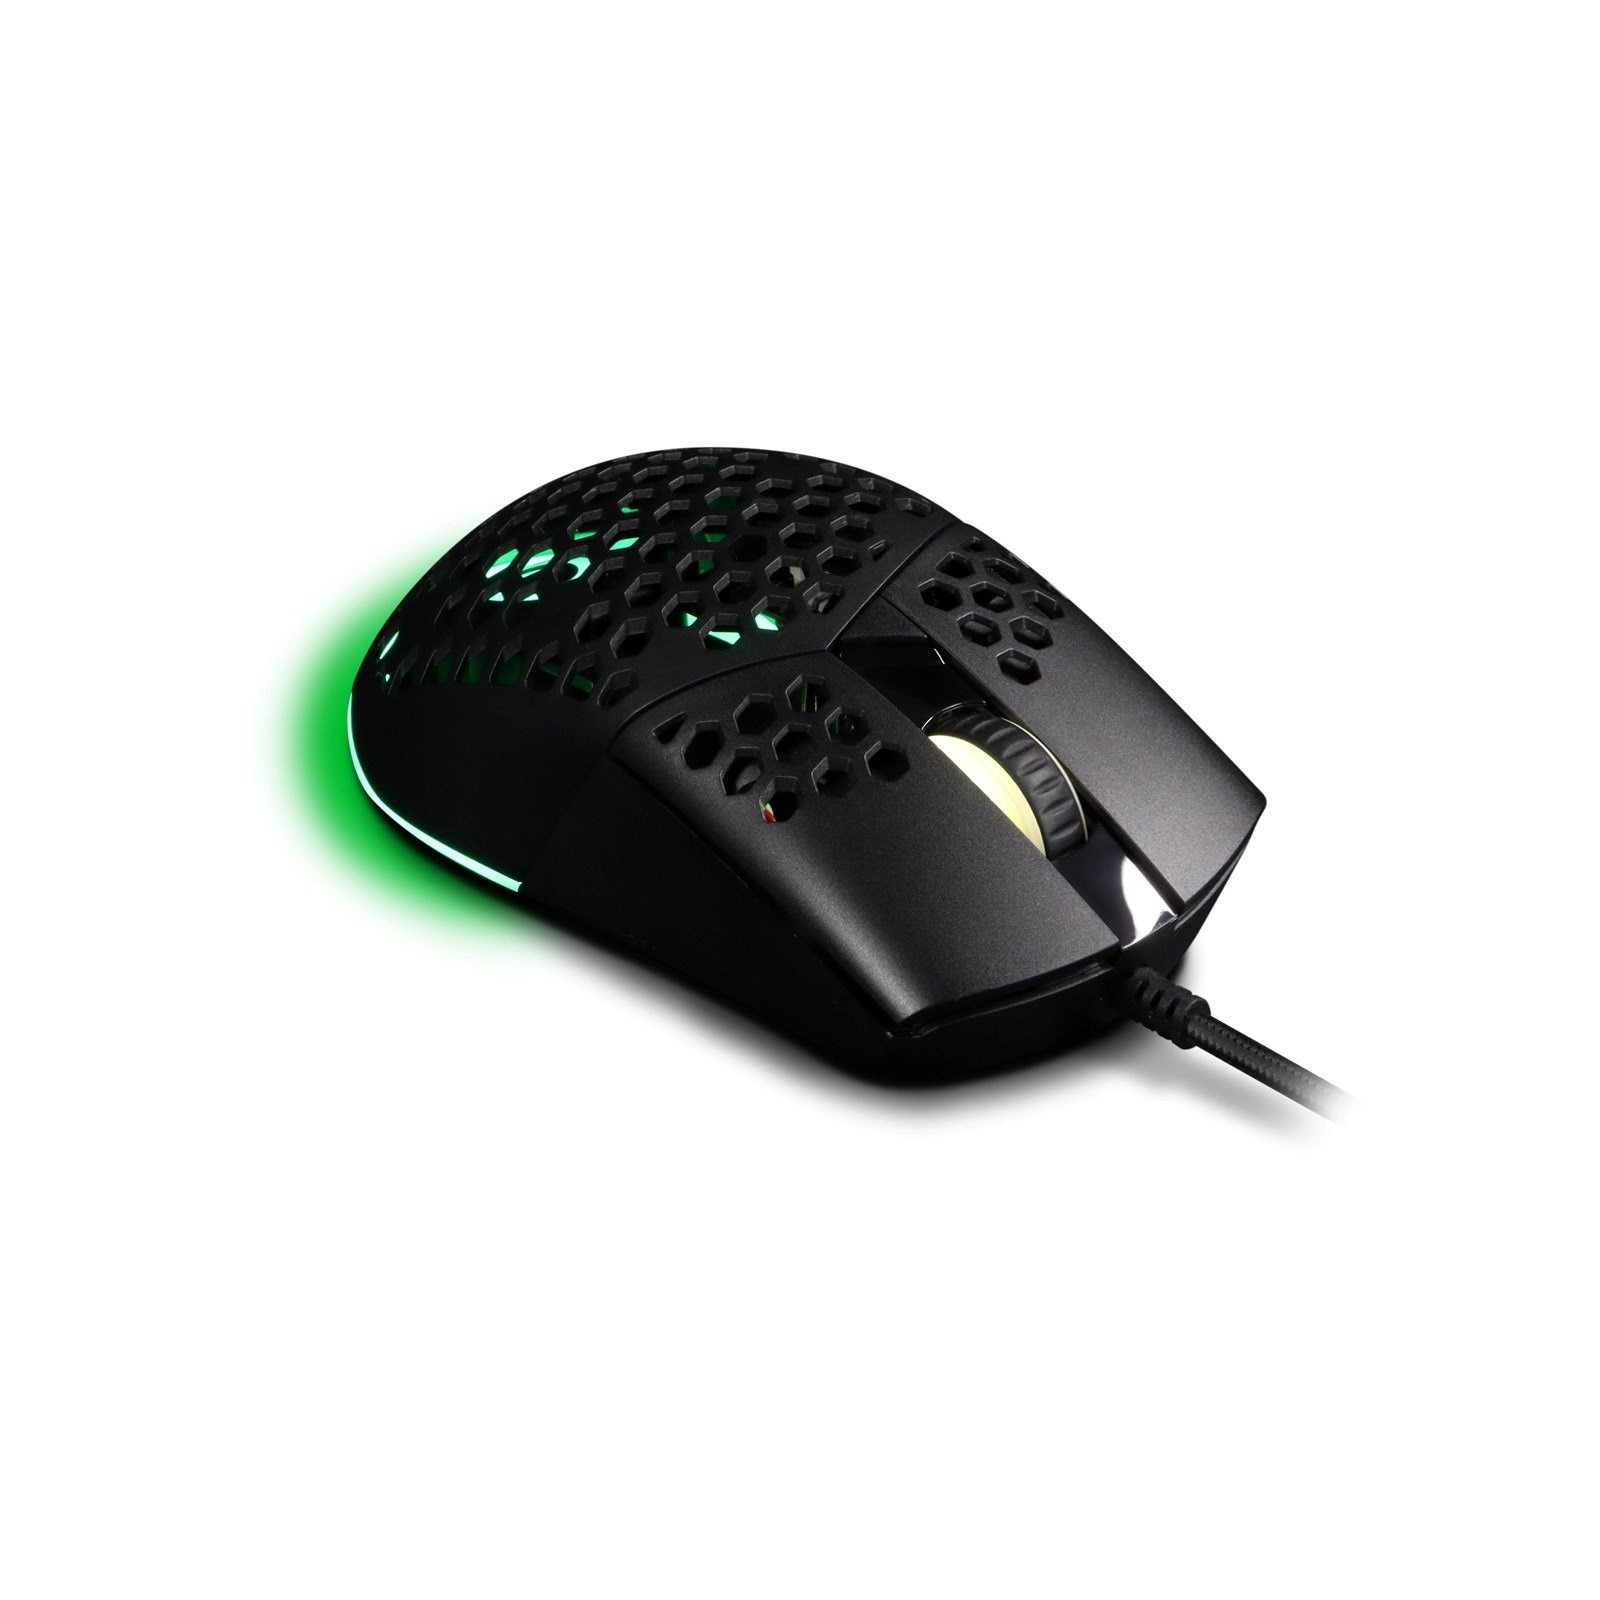 Chillblast Aero V2 Gaming Mouse